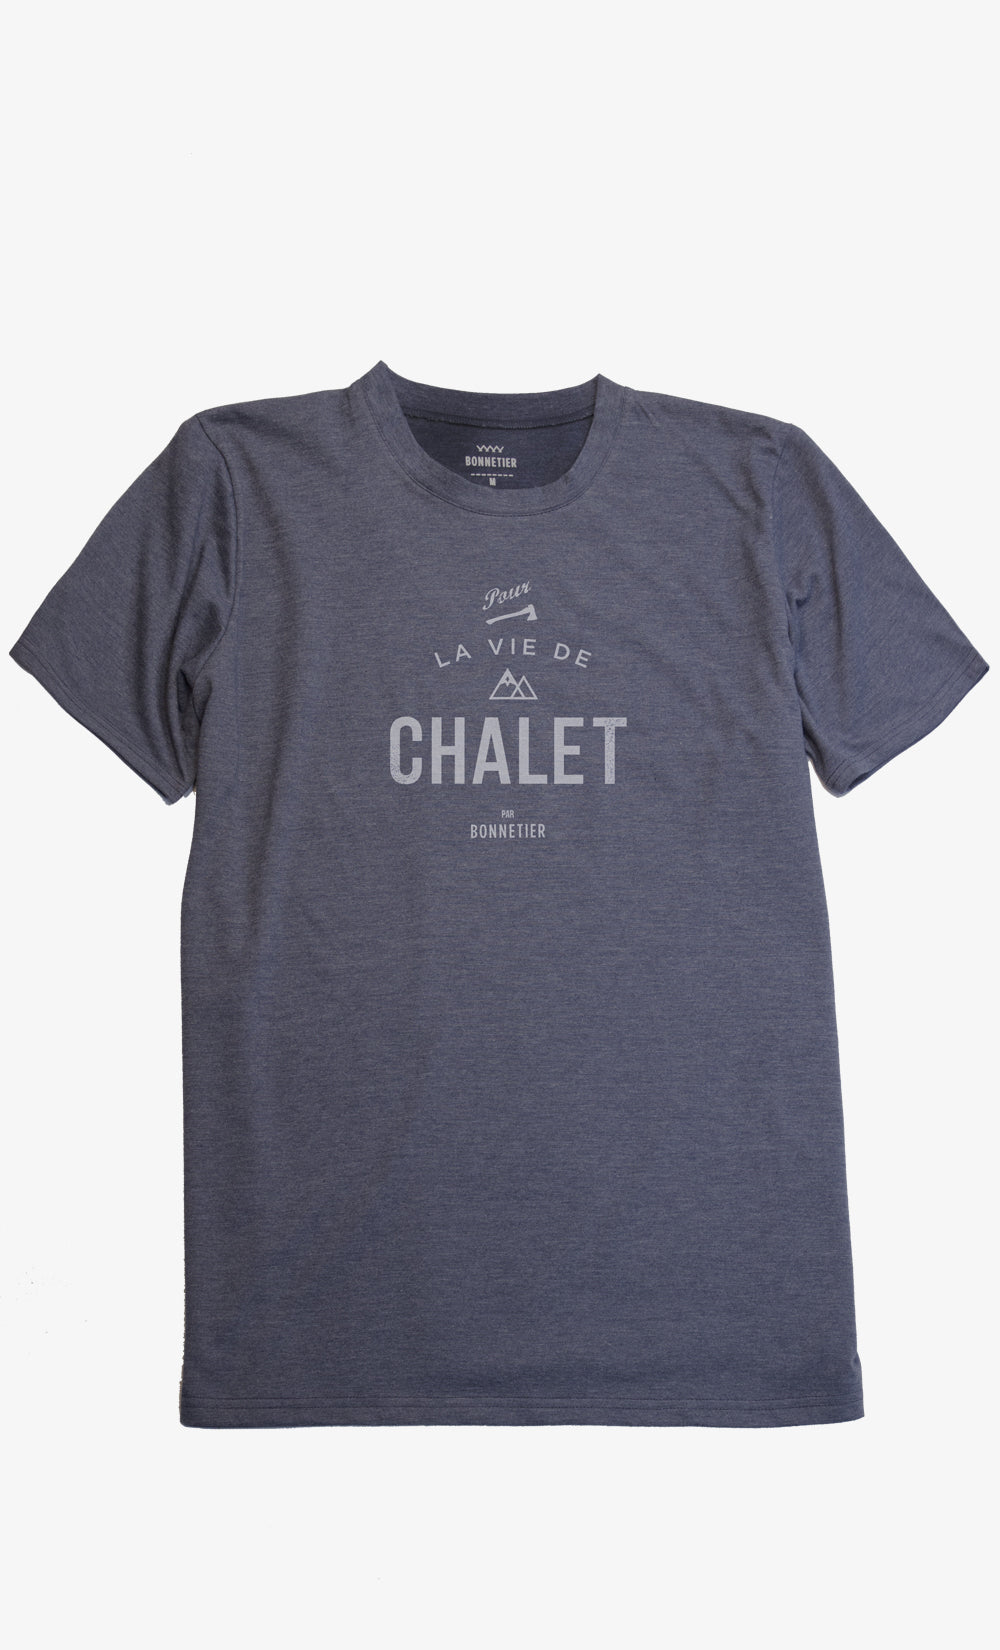 Men's T-shirt Charcoal - Chalet